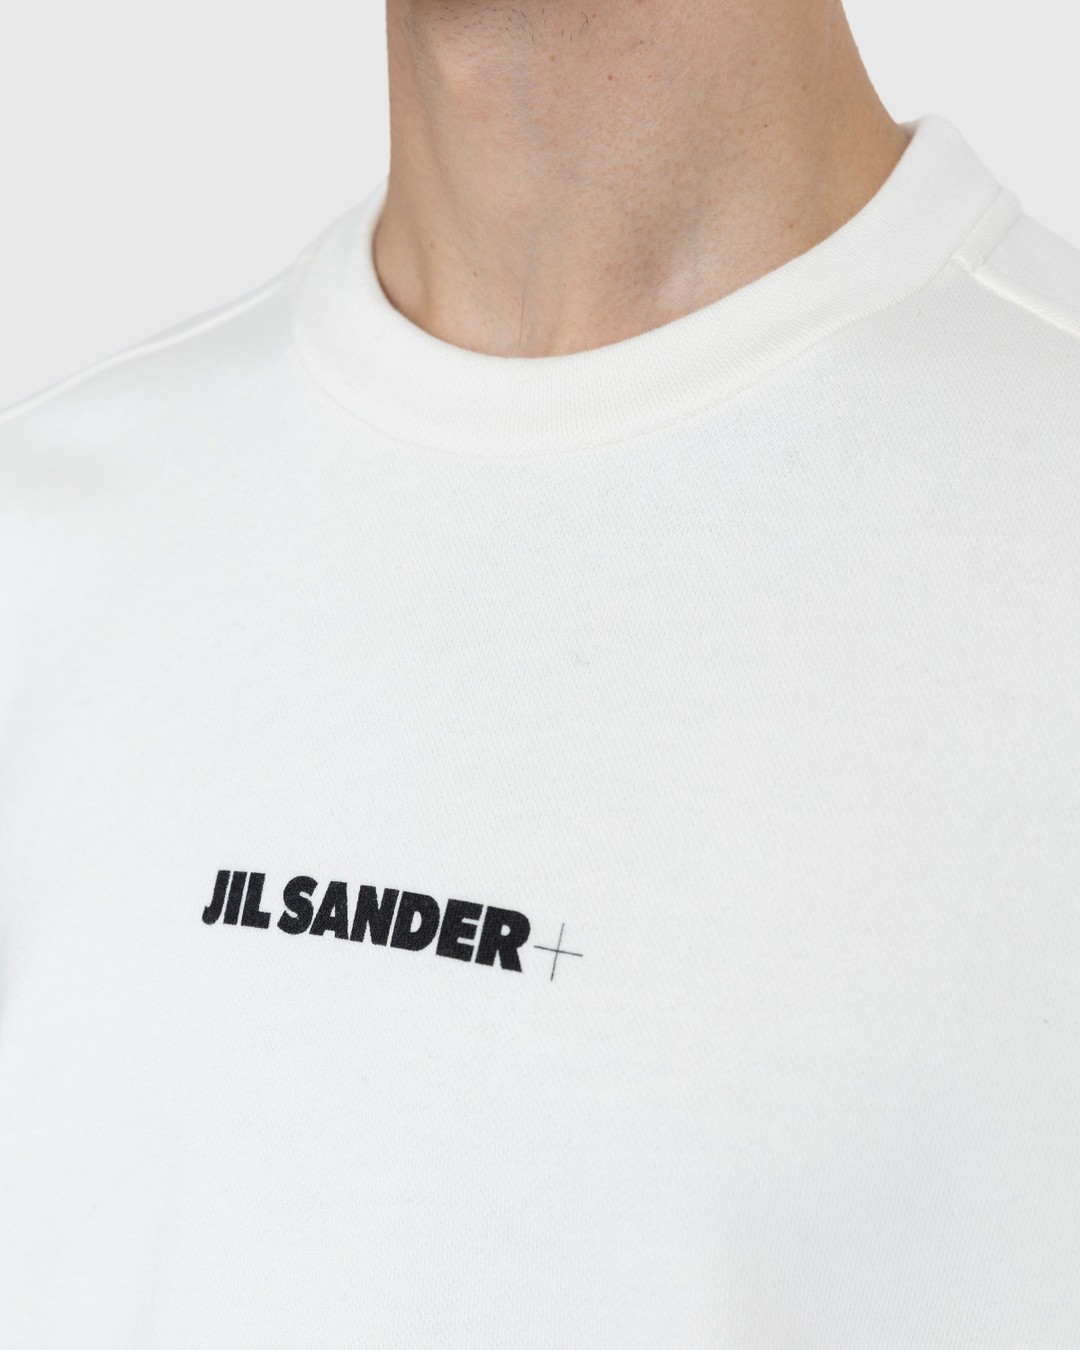 Jil Sander – Logo Sweatshirt Beige - Sweatshirts - Beige - Image 5